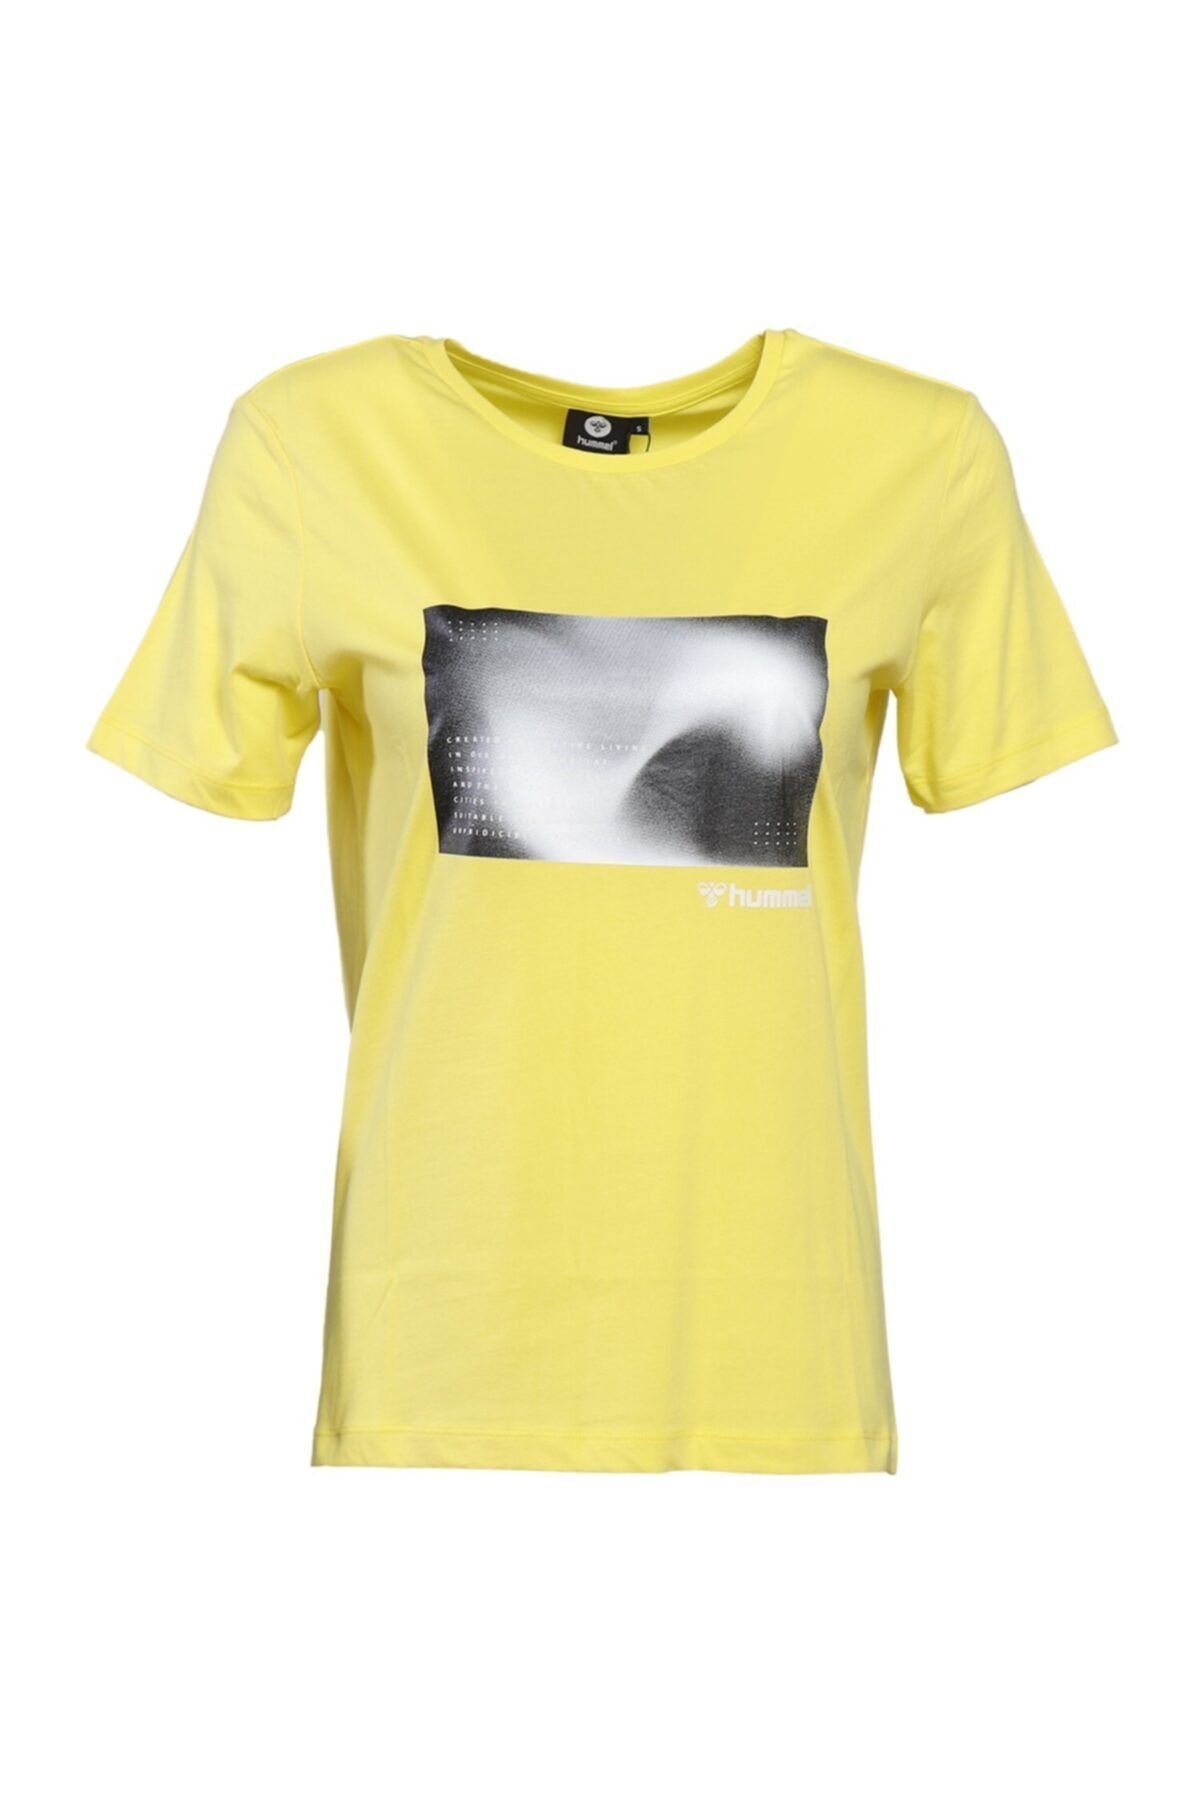 hummel Kadın Sarı T-Shirt